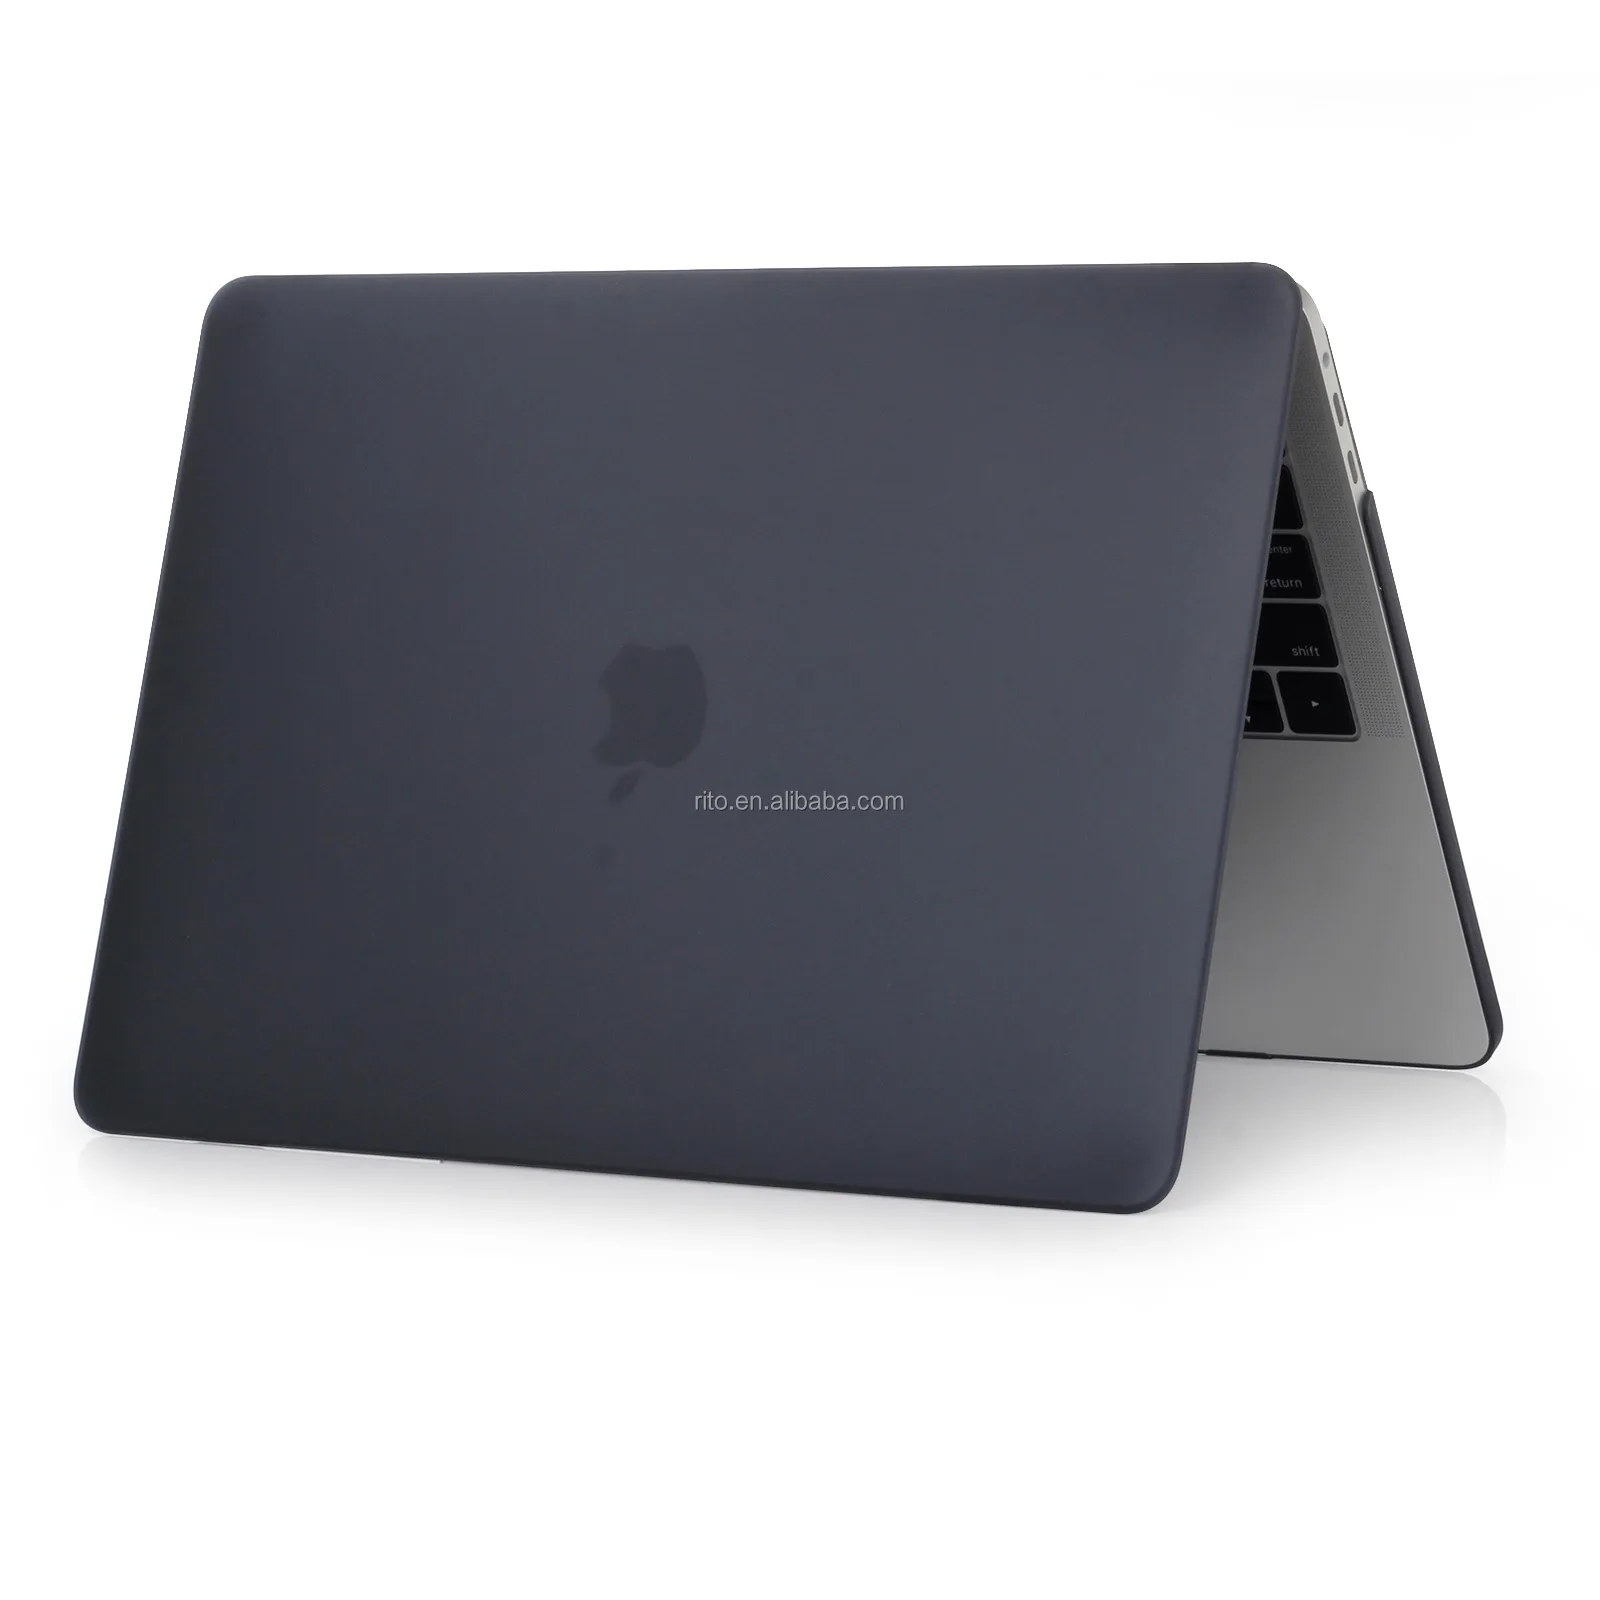 MacBook case 4.jpg